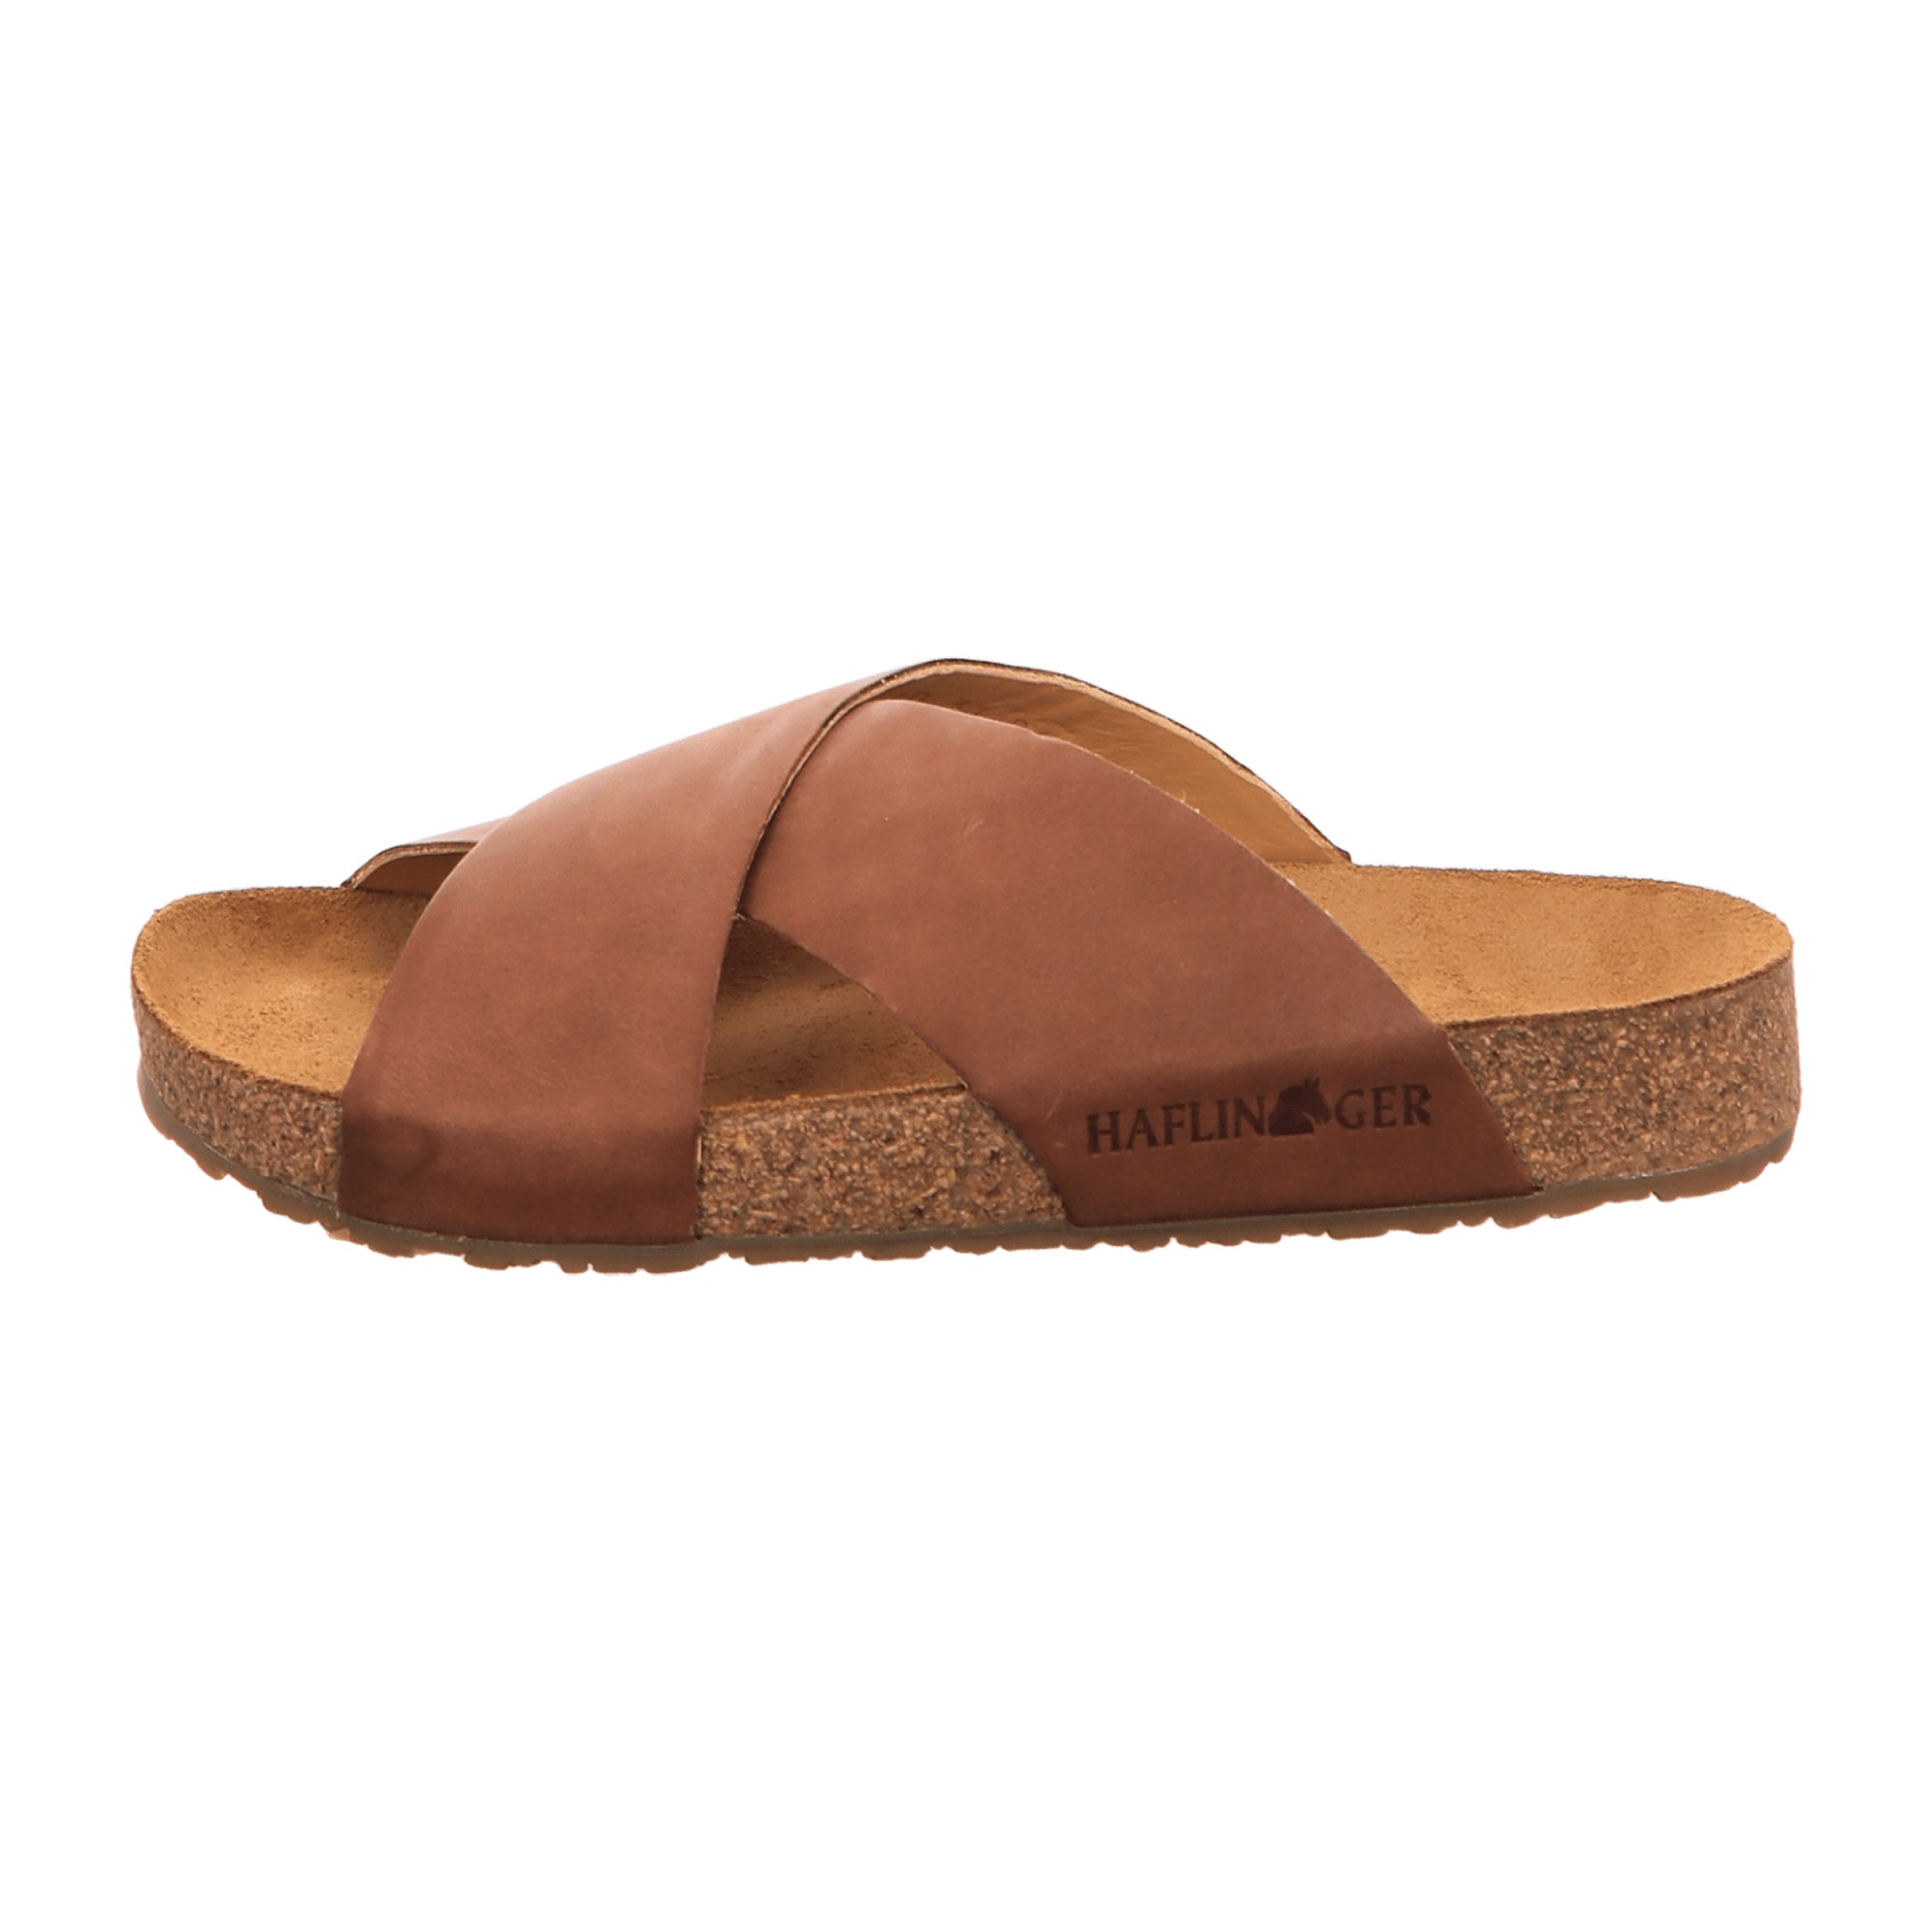 Haflinger Bio Mio Women's Brown Sandals - Eco-Friendly and Stylish